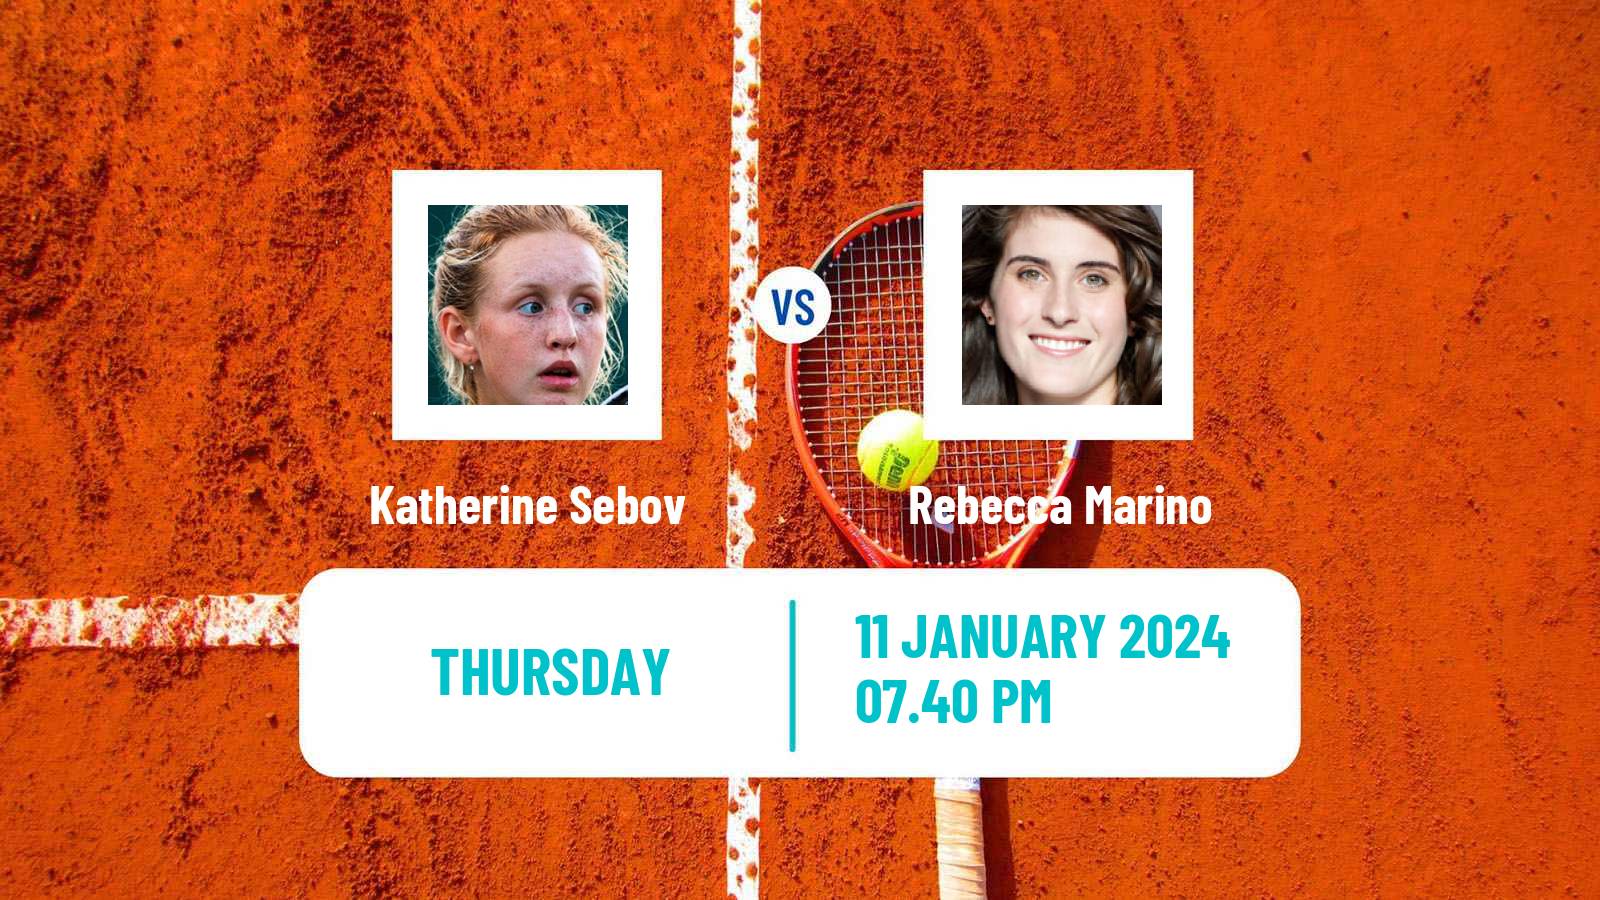 Tennis WTA Australian Open Katherine Sebov - Rebecca Marino